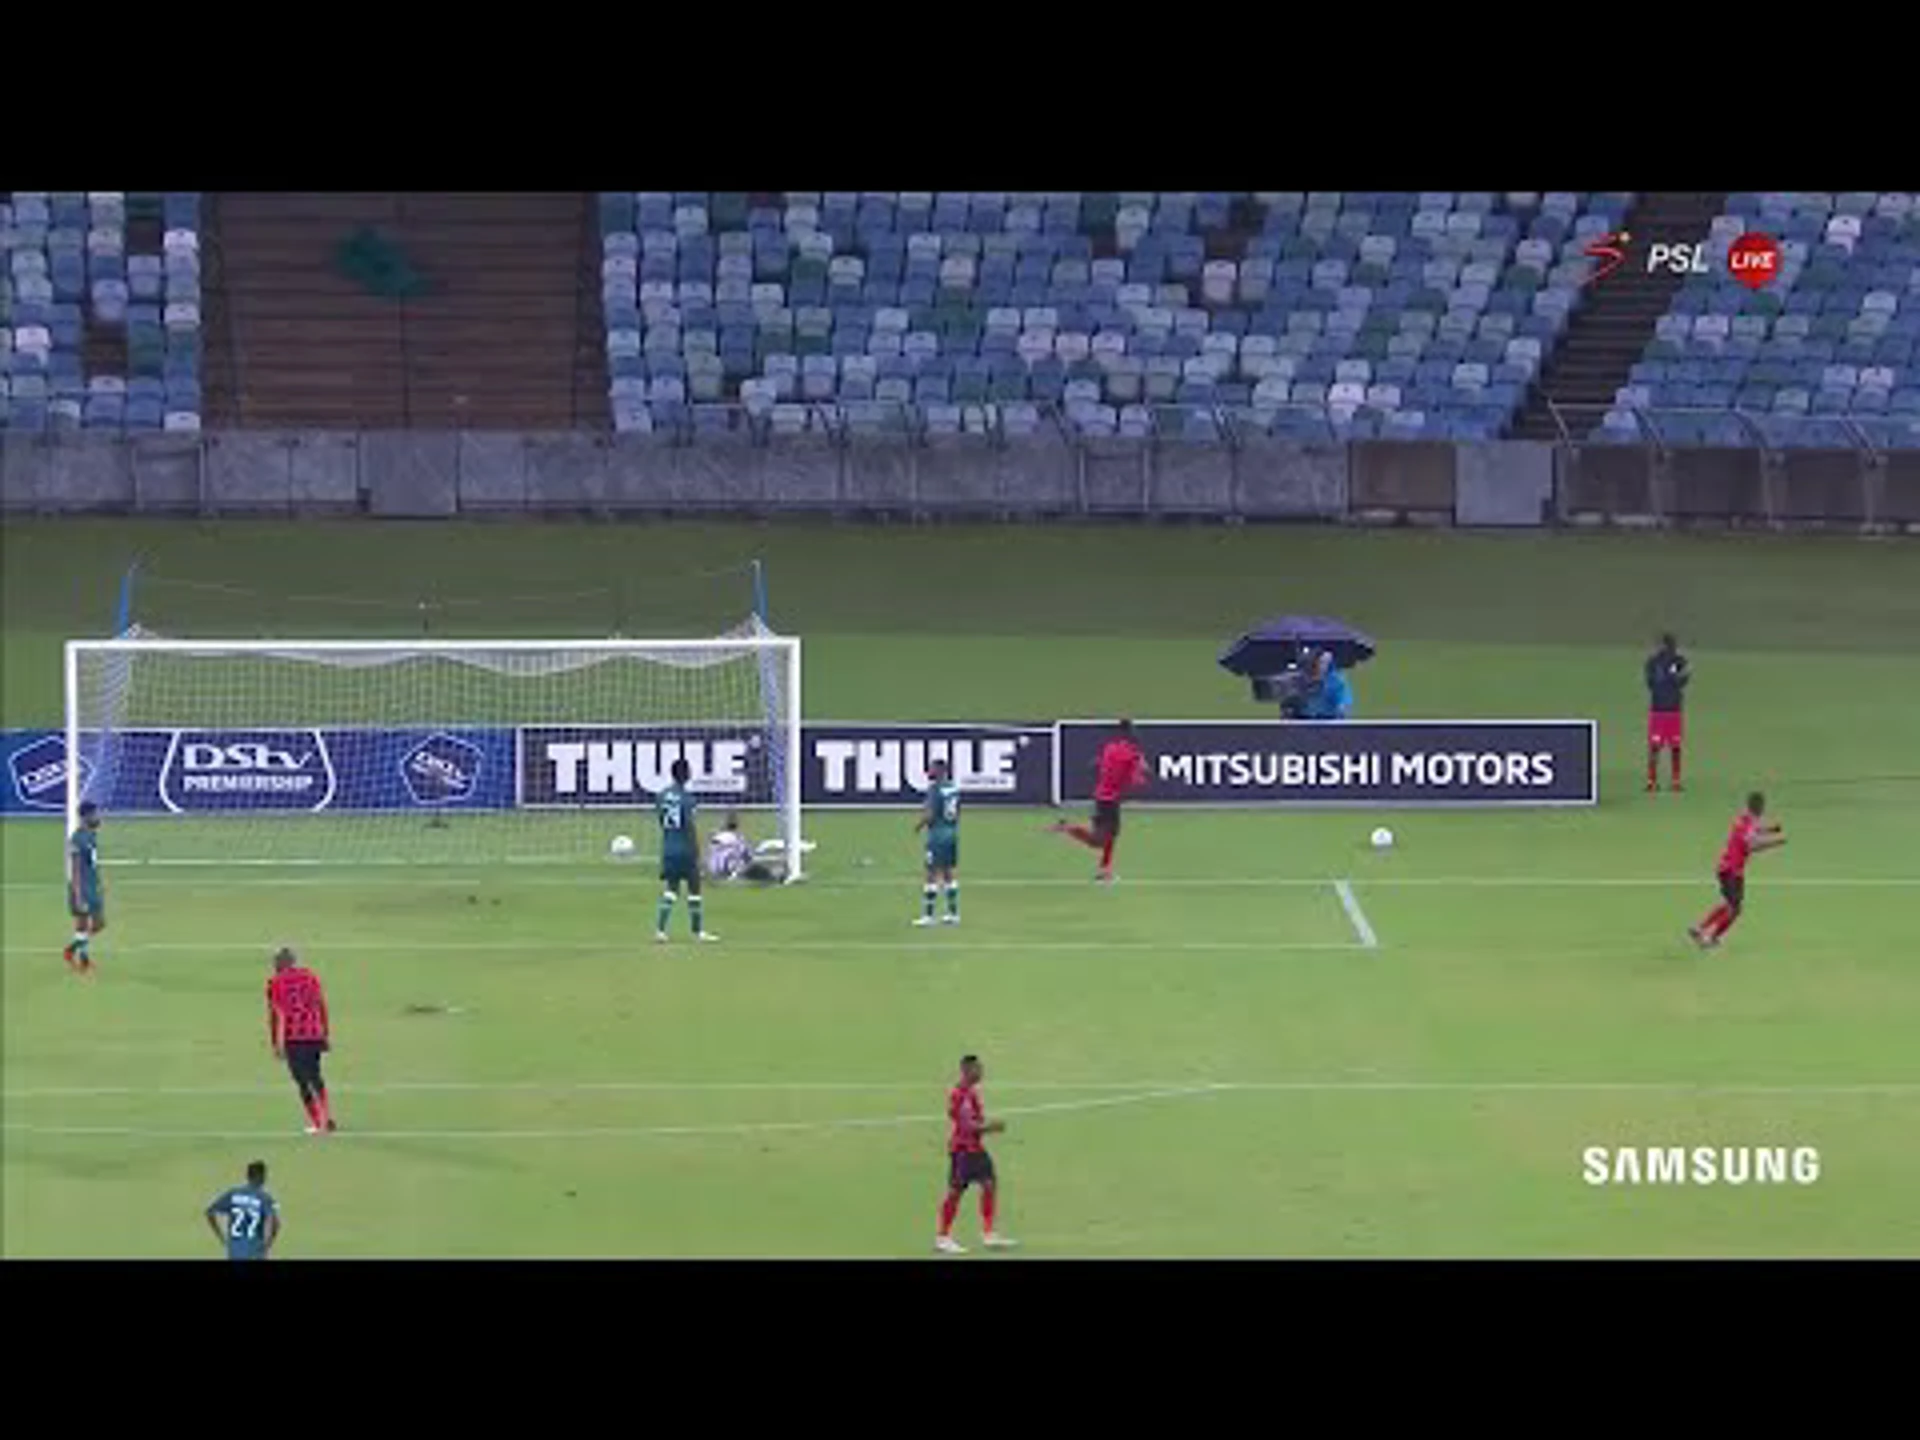 Djakaridja Traore with a Goal vs. AmaZulu